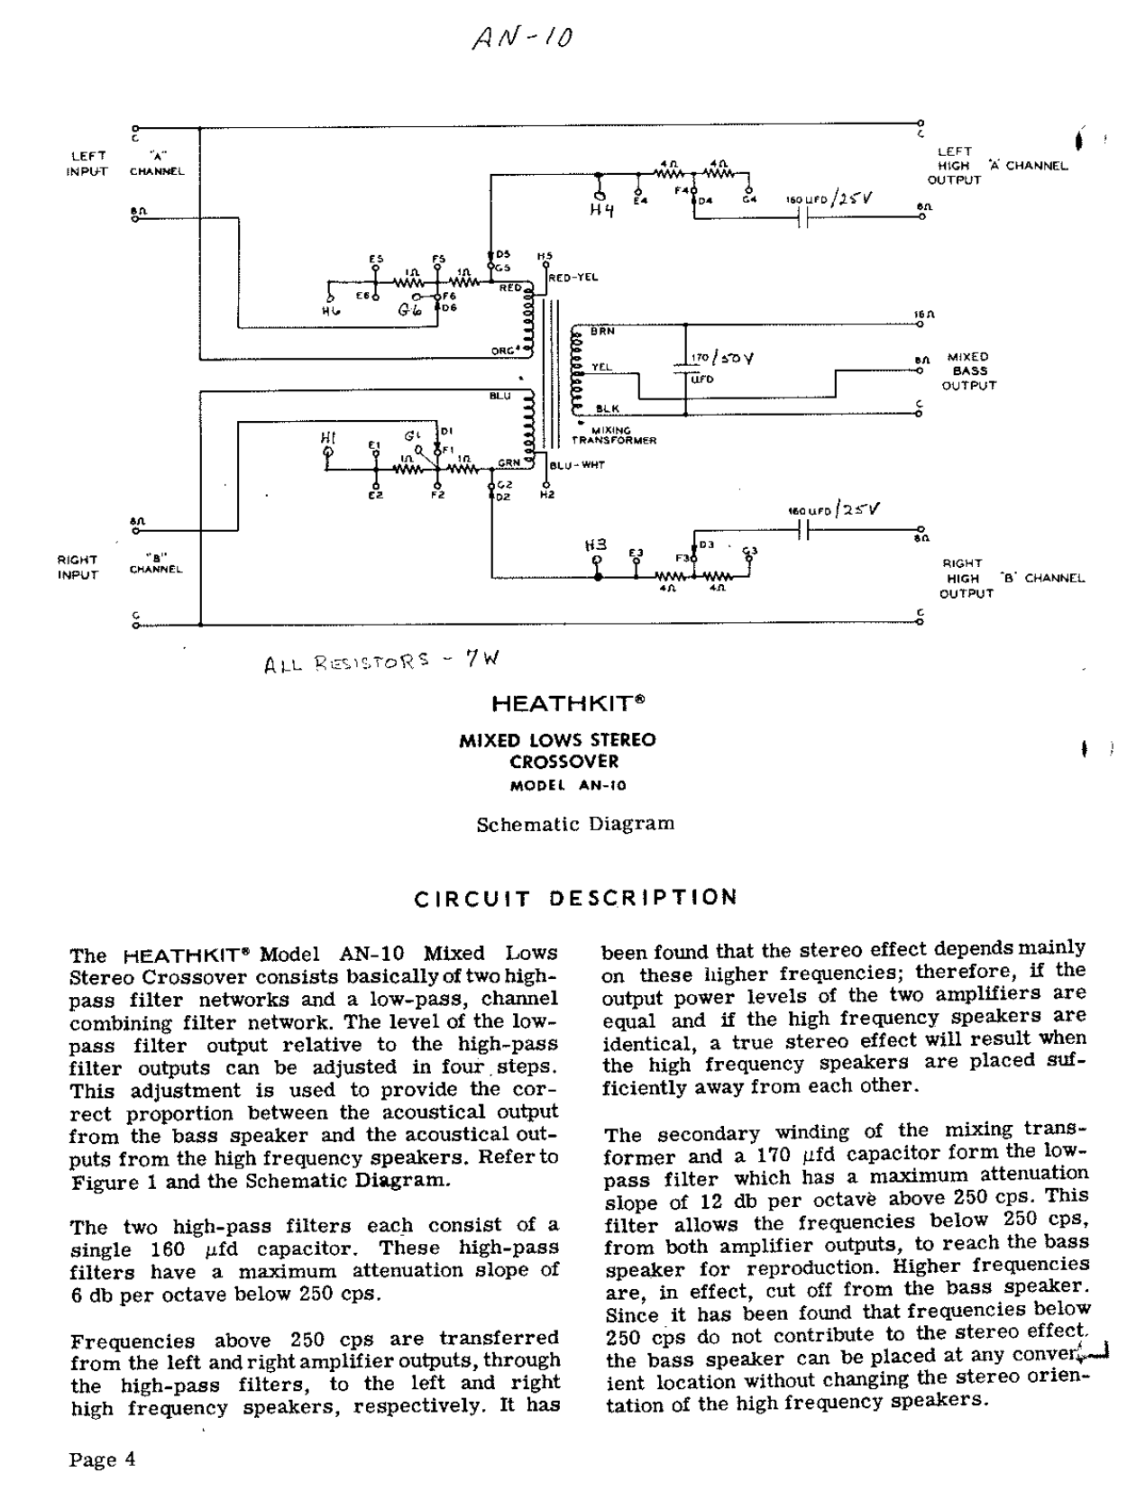 Heathkit AN-10 Stereo Crossover - Circuit Description